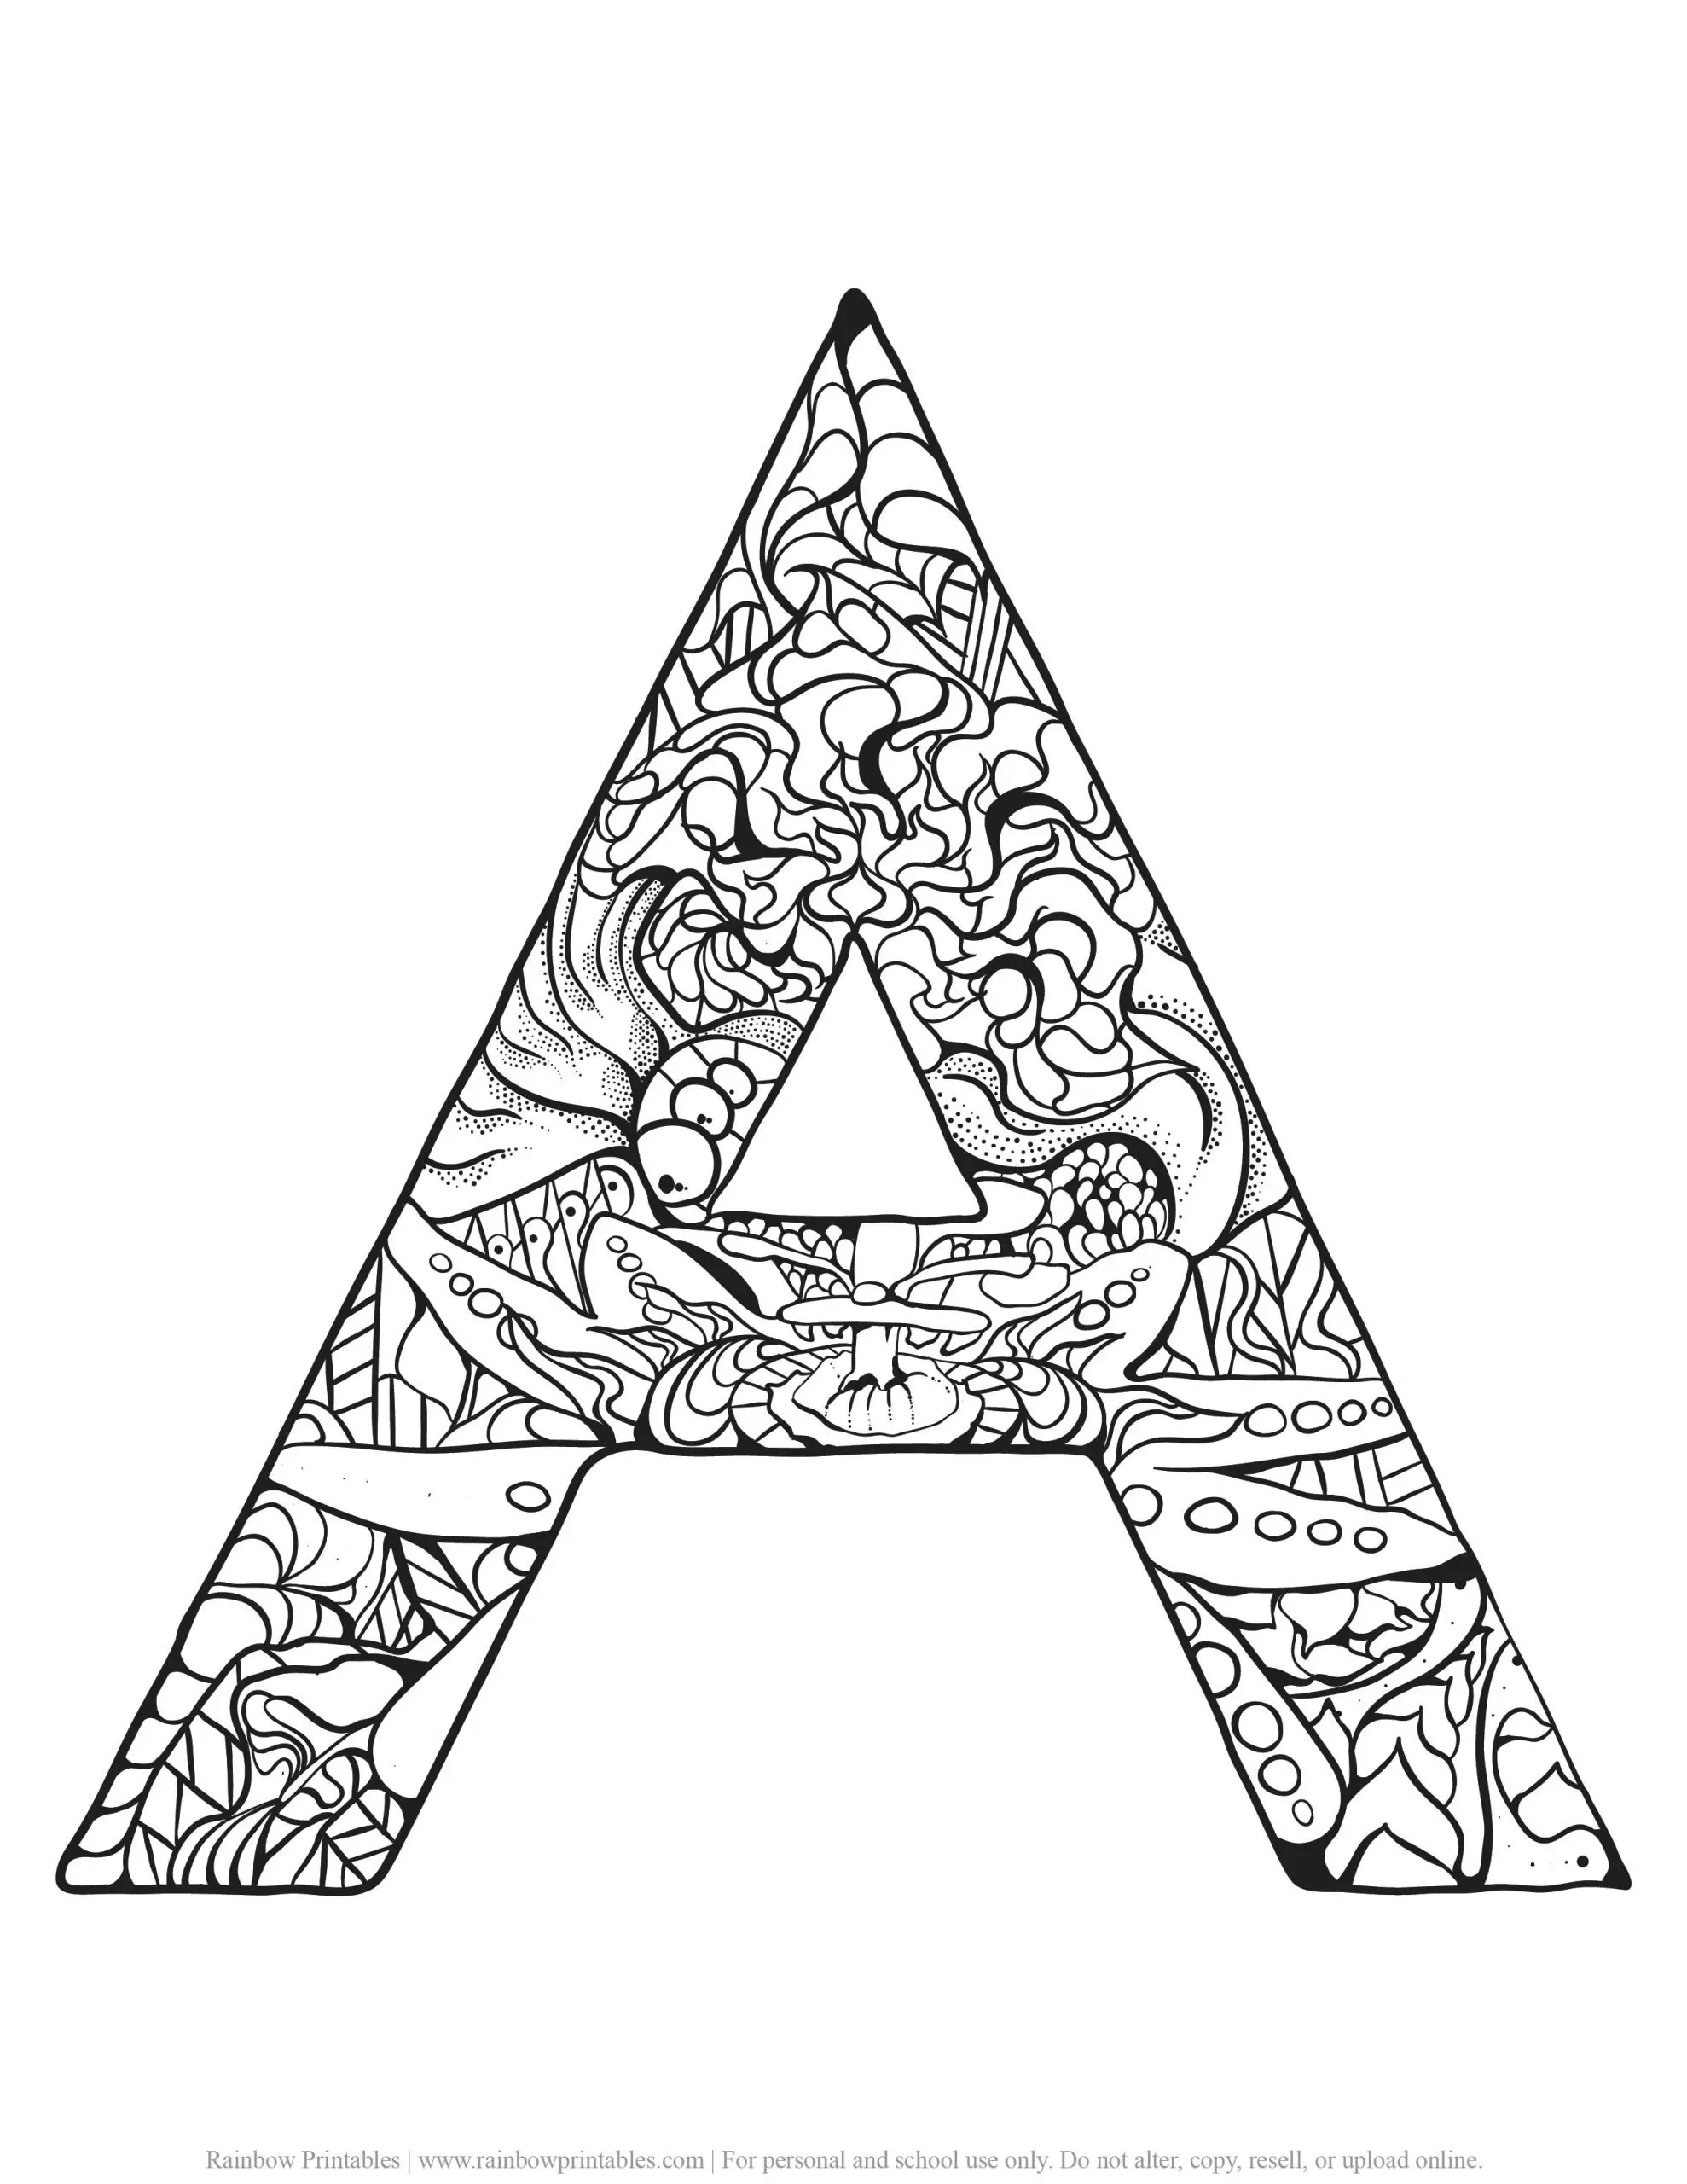 ABC Alphabet Letter Coloring Pages   Rainbow Printables